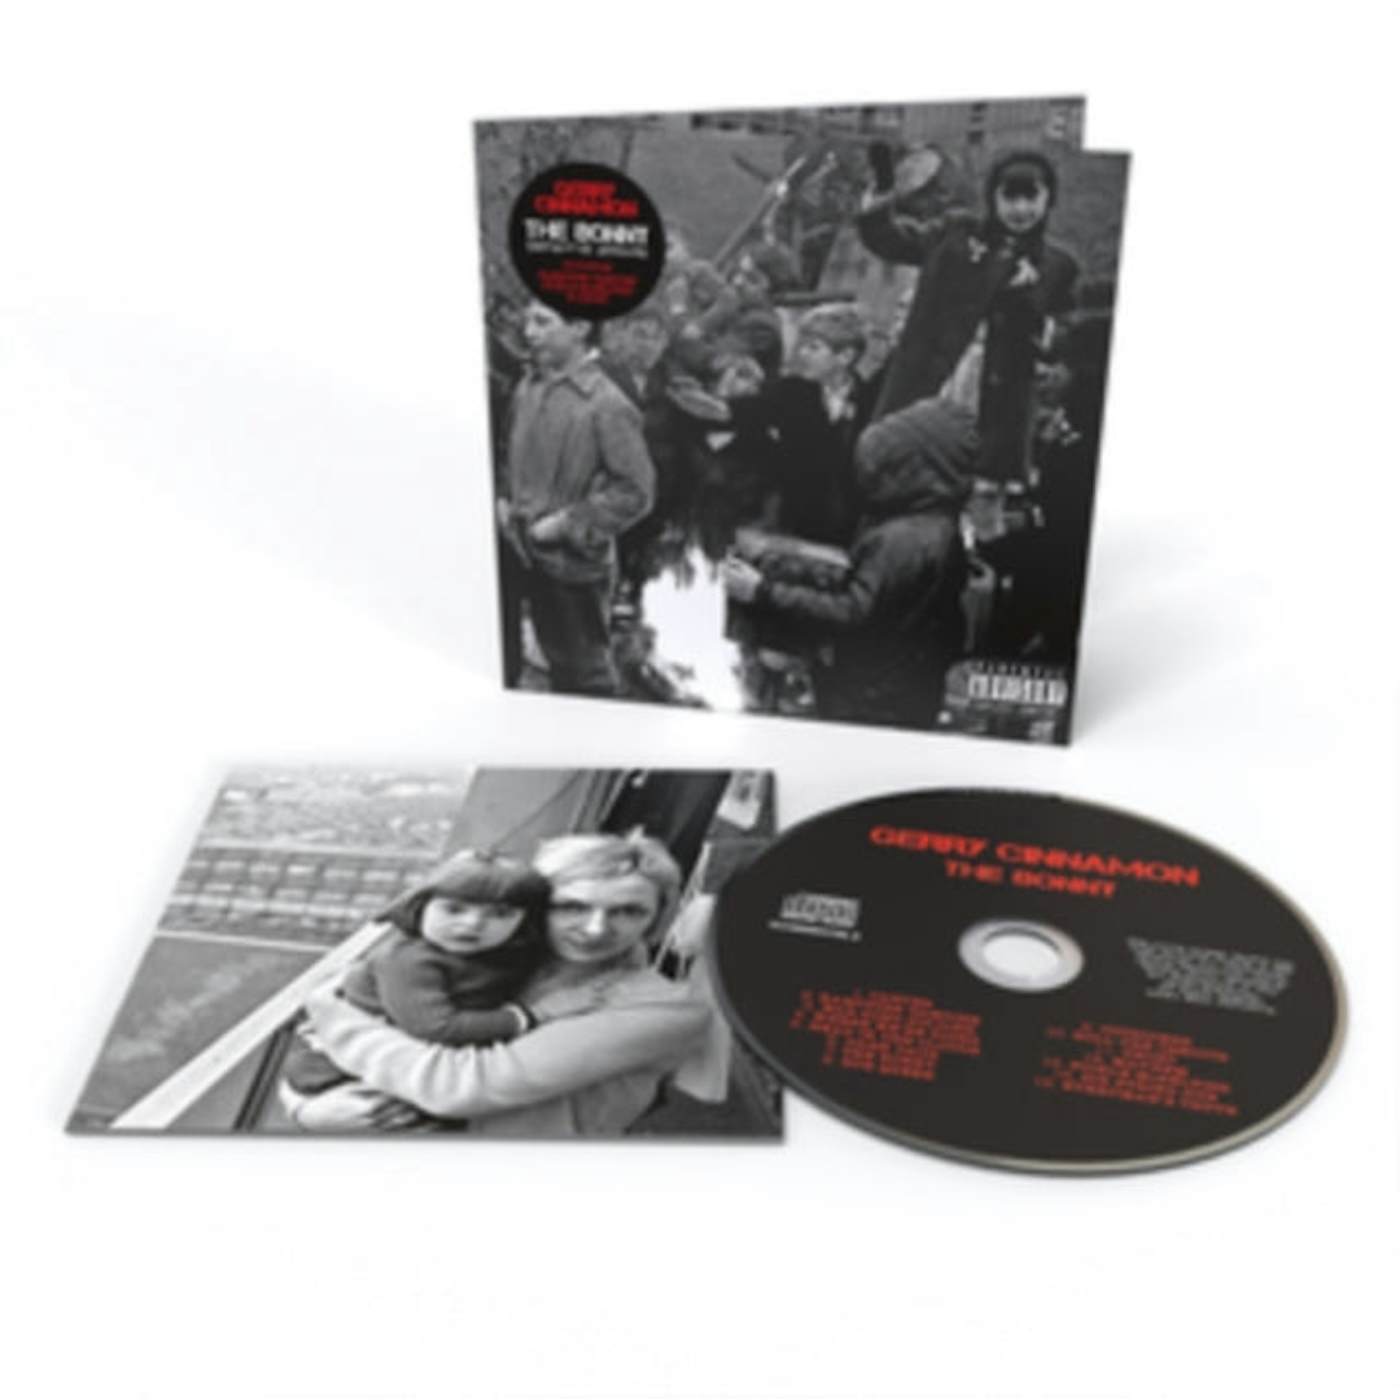 Gerry Cinnamon CD - The Bonny (Definitive Version)